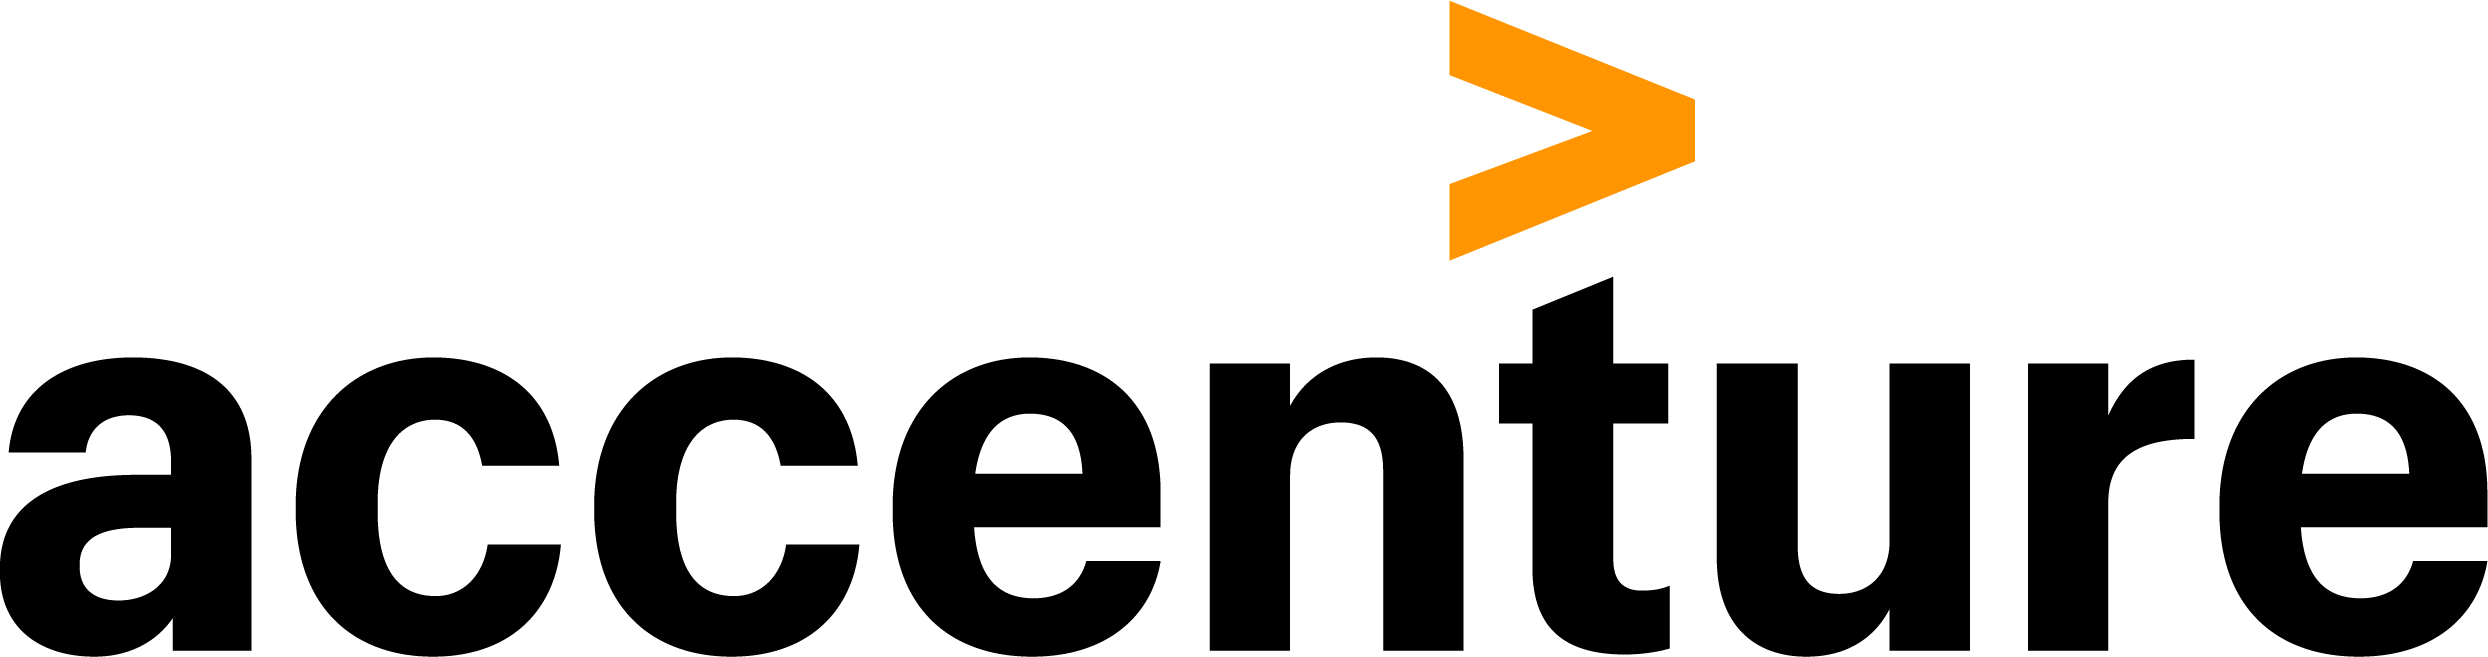 Accenture Technology Logo - Accenture